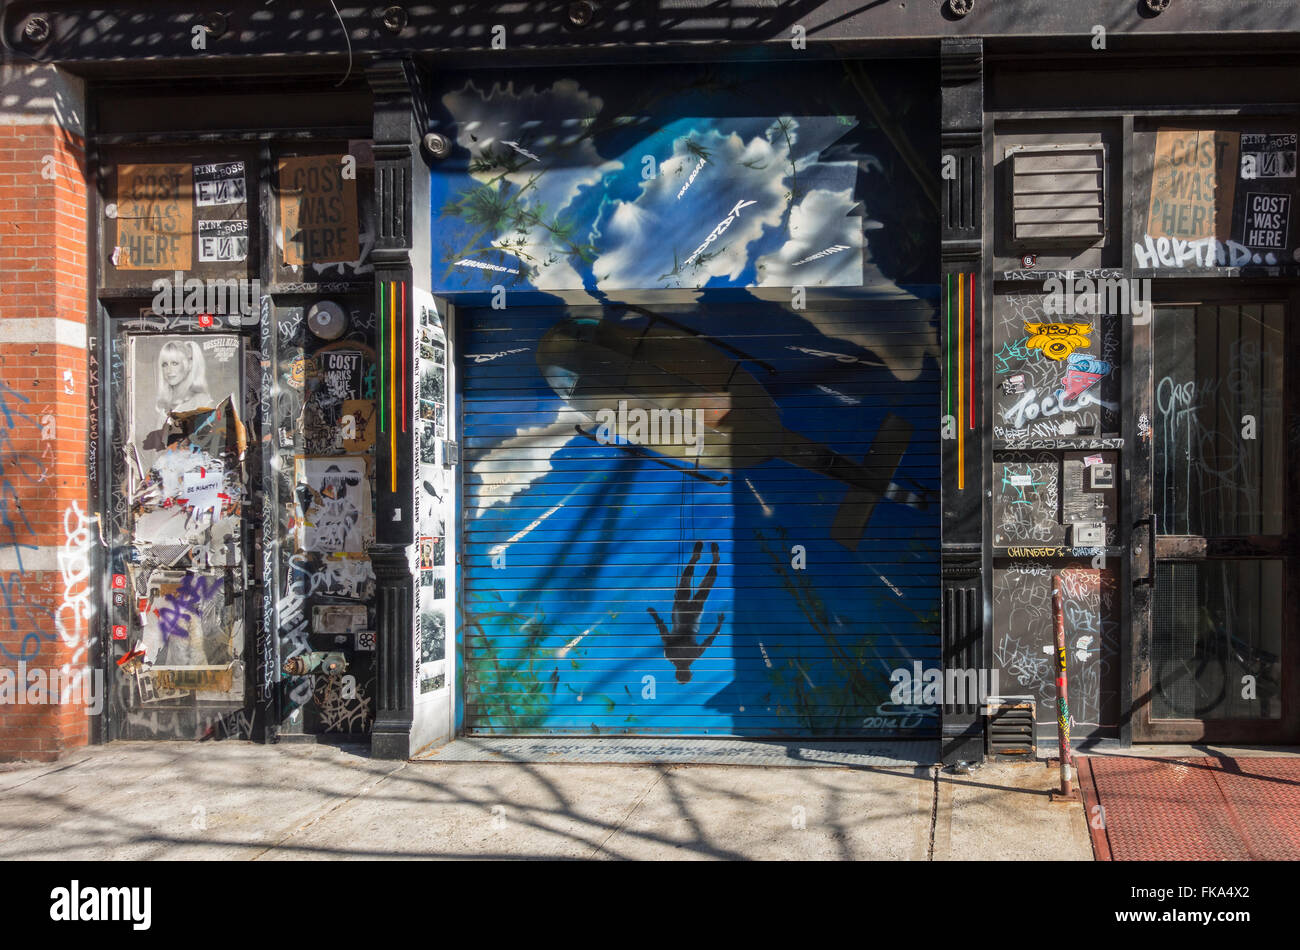 graffiti covered artist studio in the Lower East Side of New York City Stock Photo